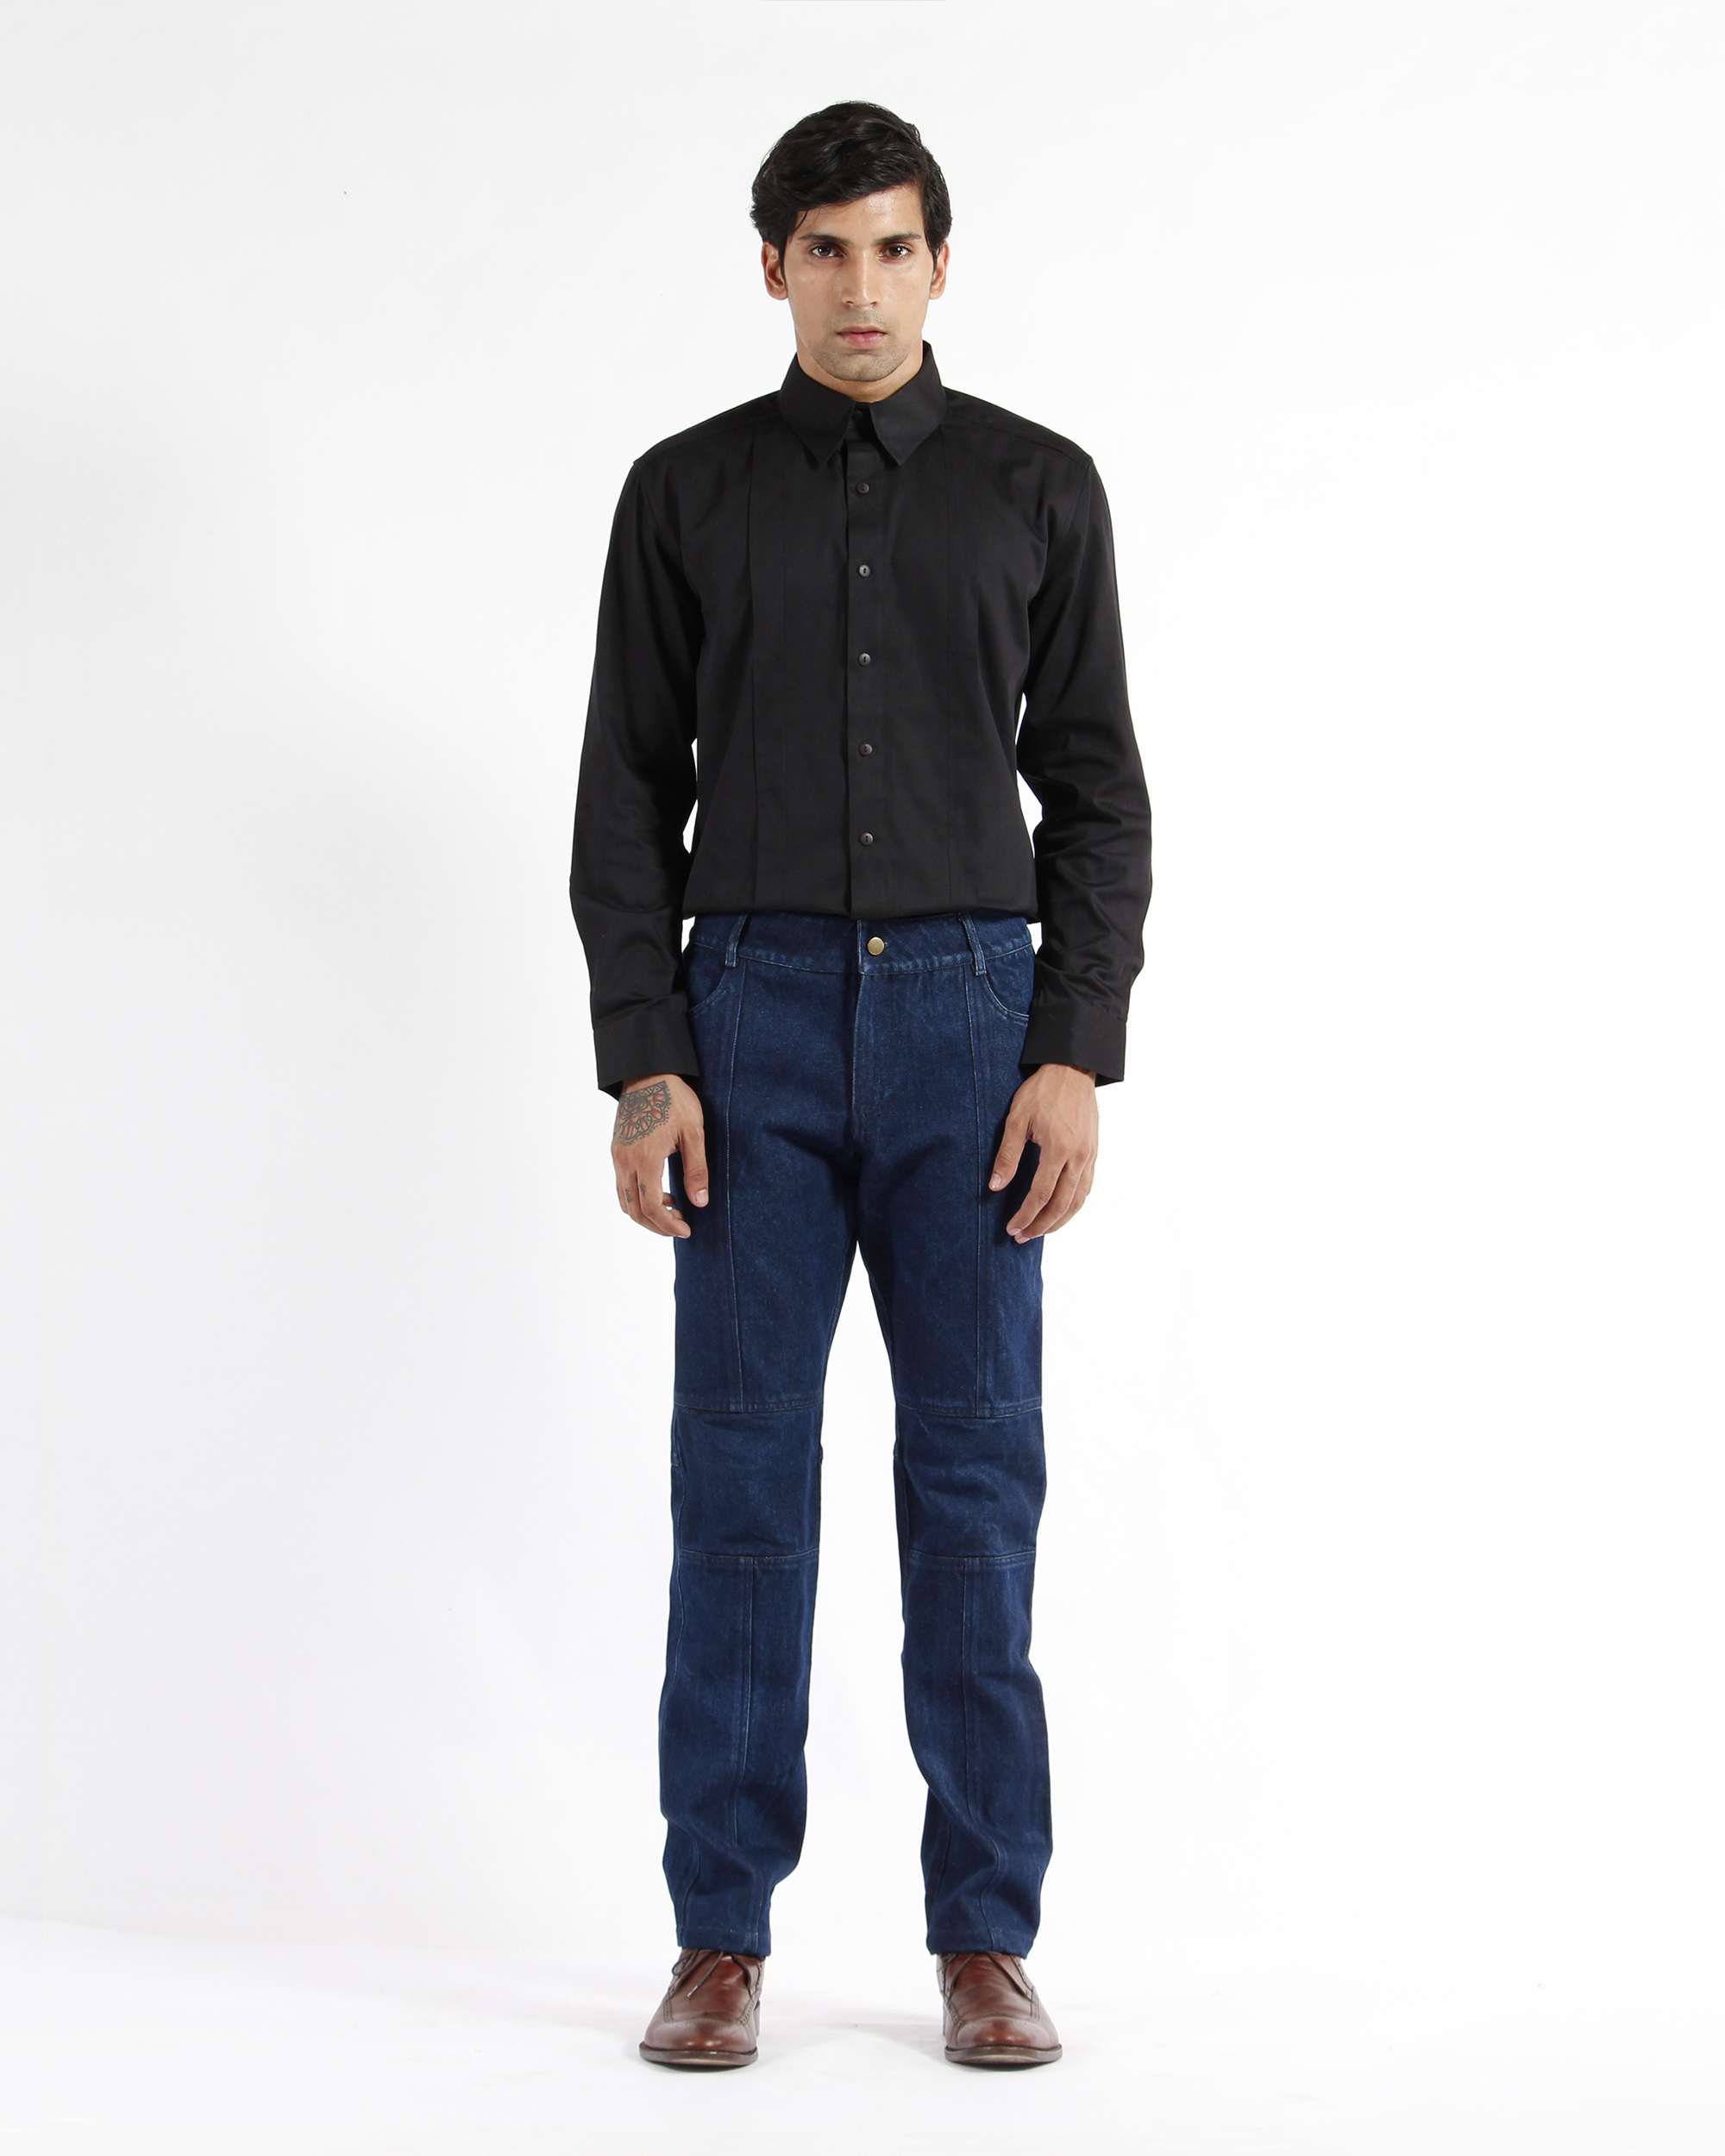 Black cotton satin pleated shirt by Dhatu Design Studio | The Secret Label